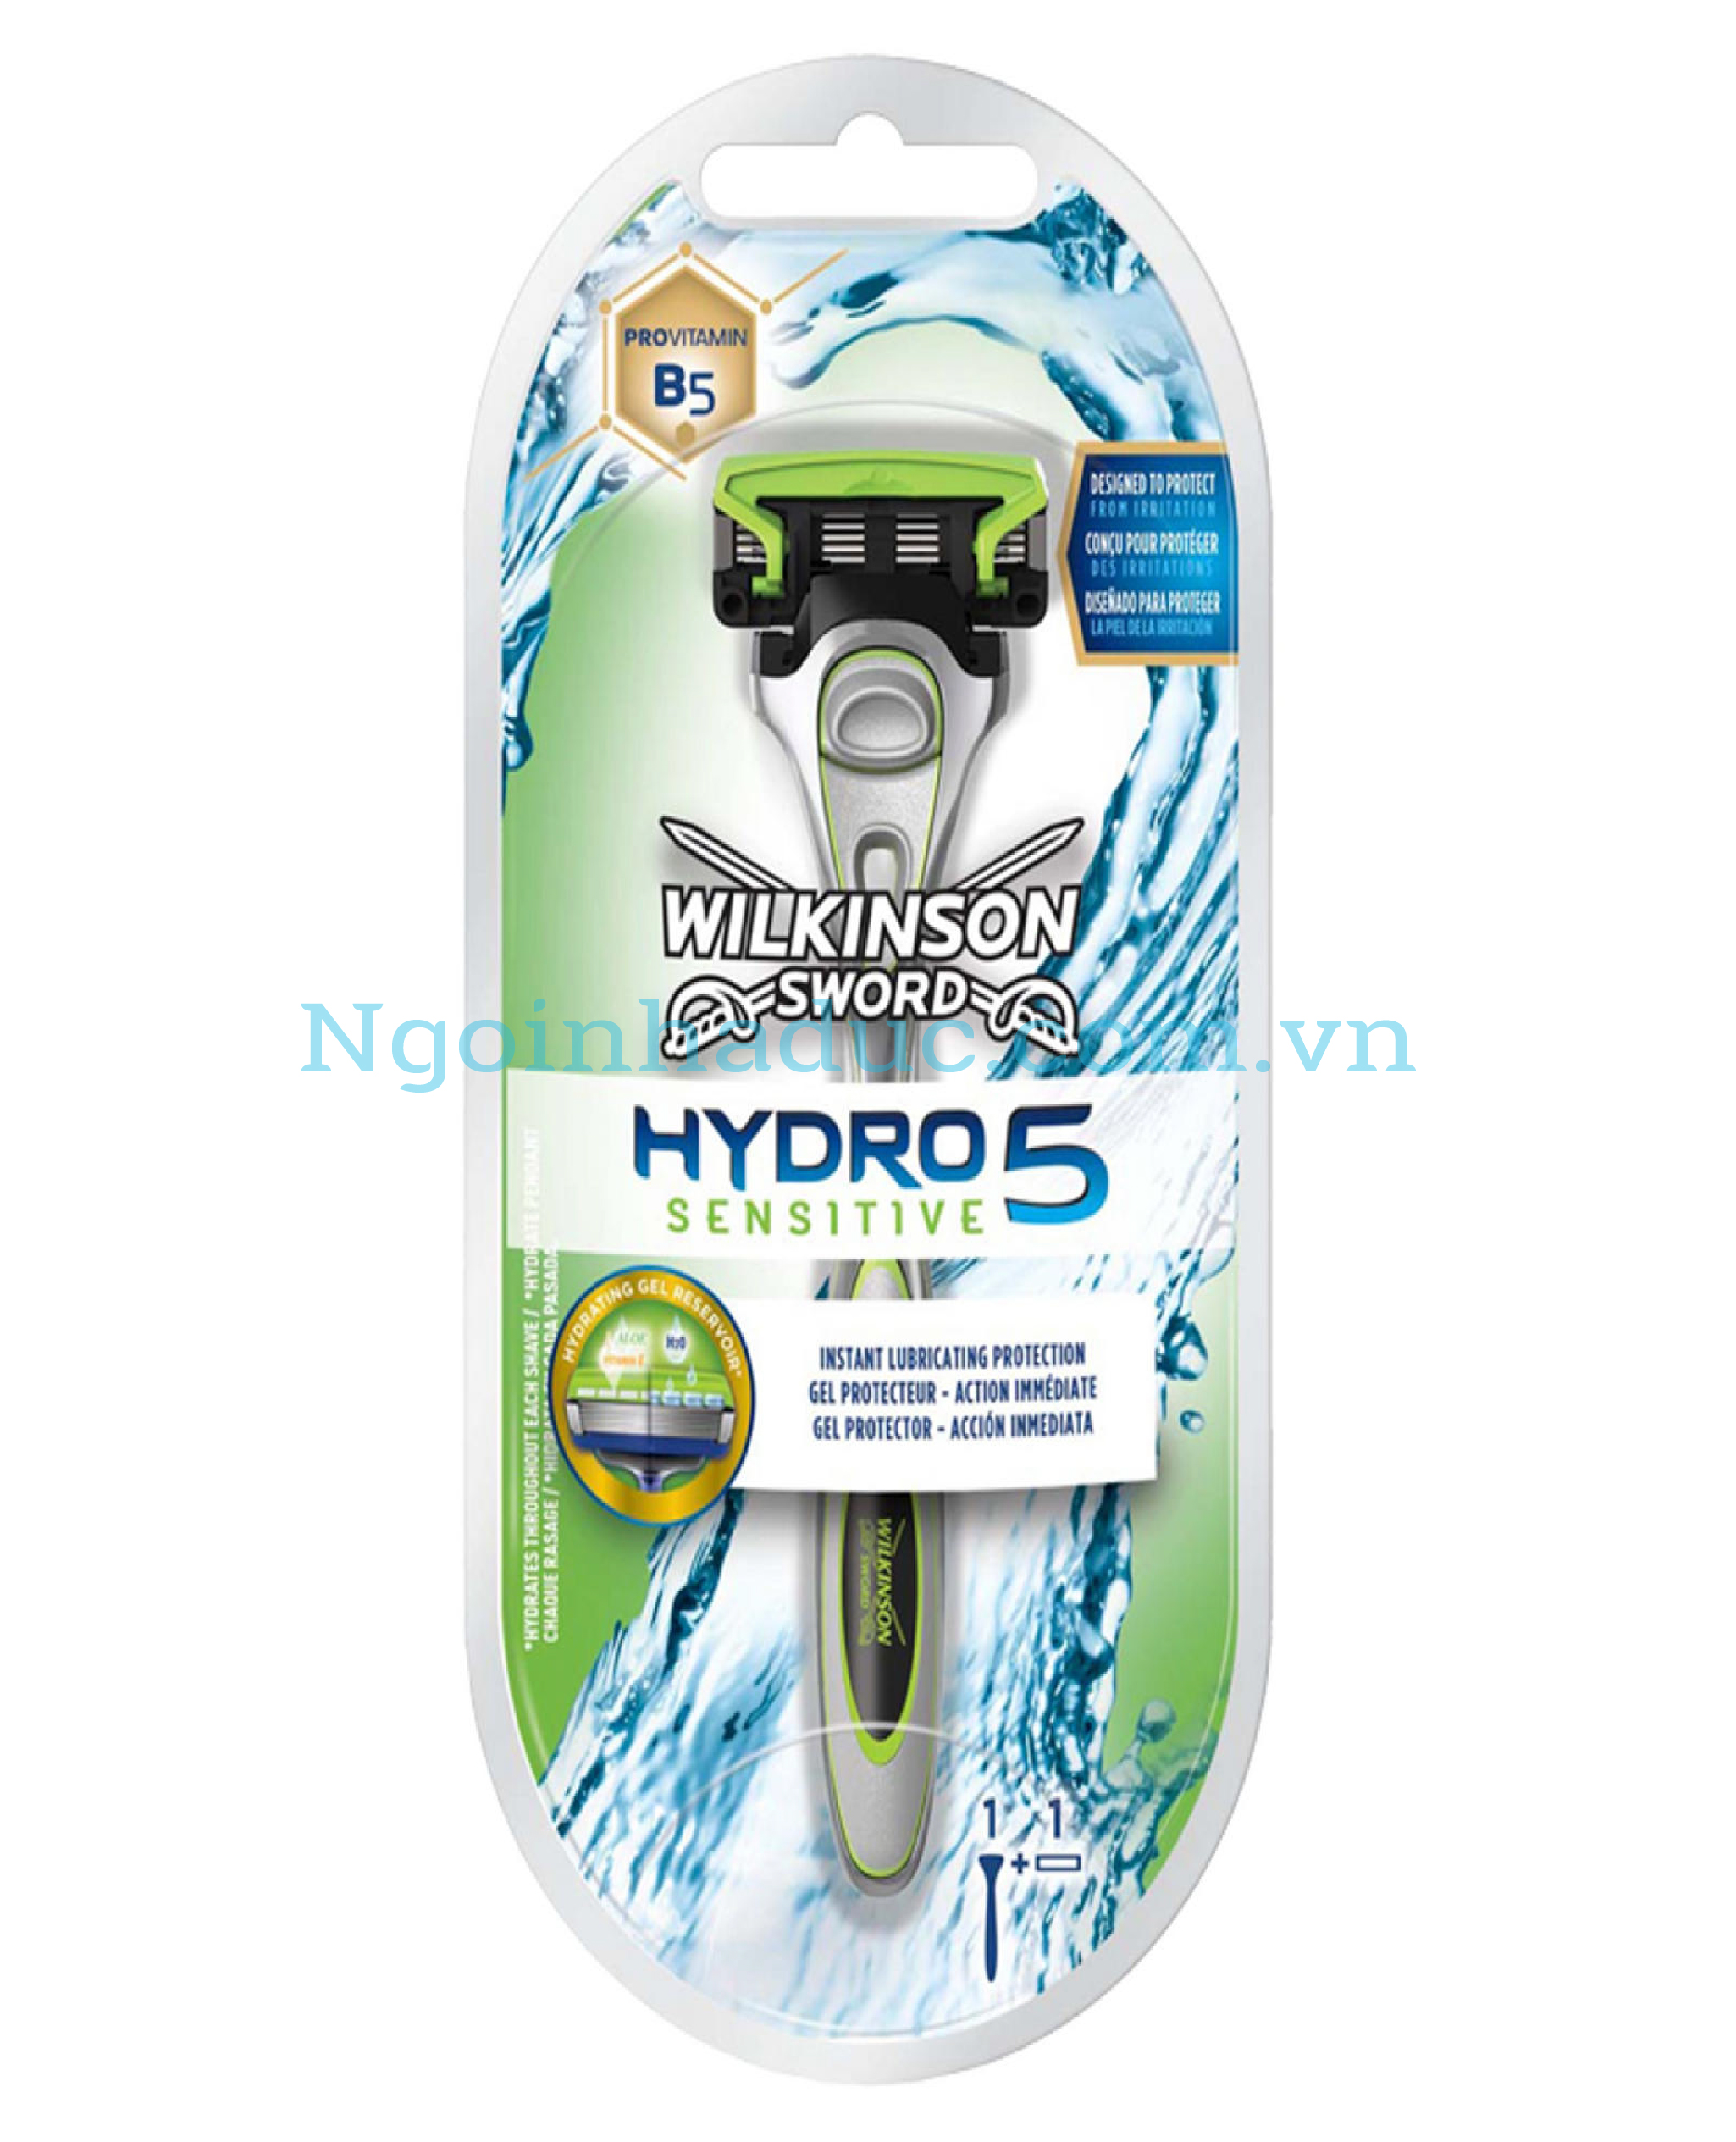 Dao cạo râu Wilkinson Sword Hydro 5 Sensitive (5 lưỡi - da nhạy cảm)